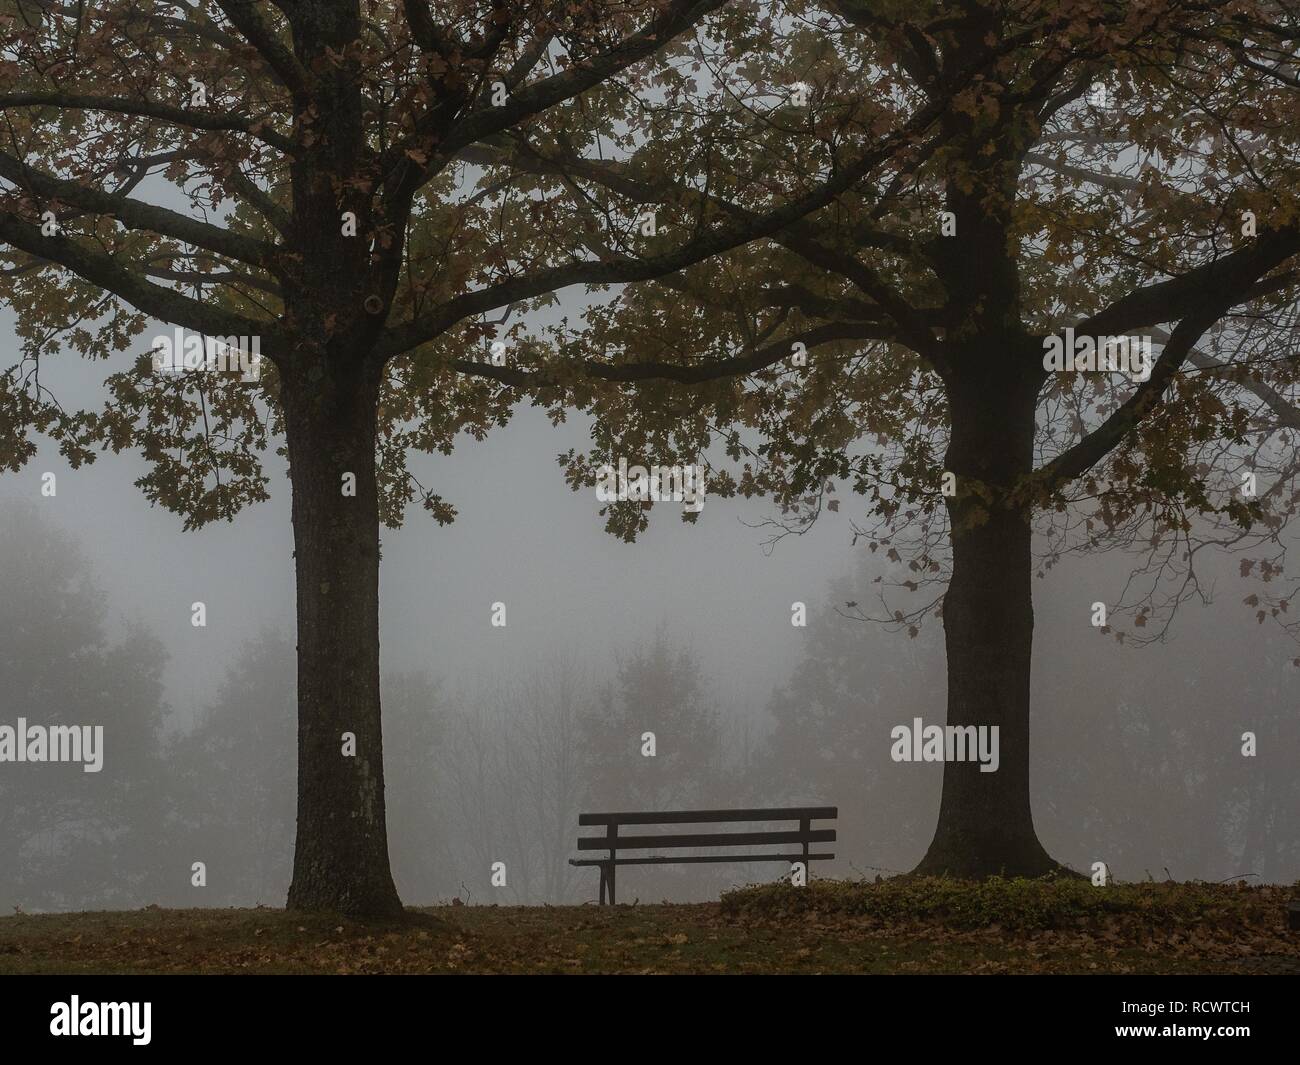 Banca tra due alberi, pace, silenzio, nebbia, autunno, Rebland, Sinzheim, Baden-Baden, Germania Foto Stock